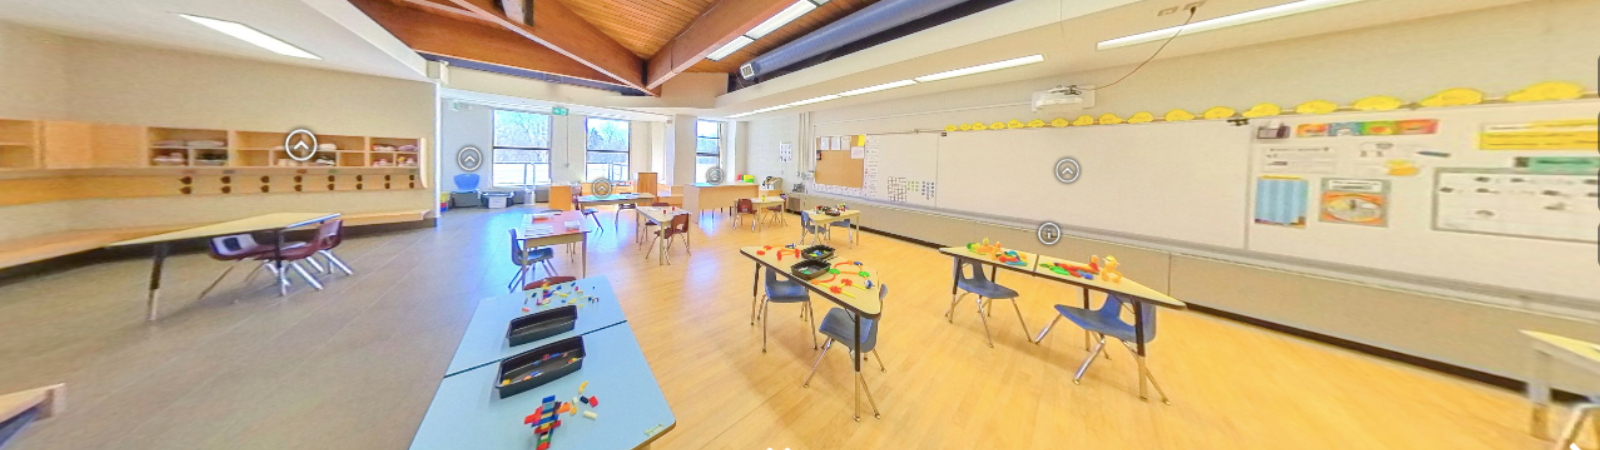 classroom with desks arranged